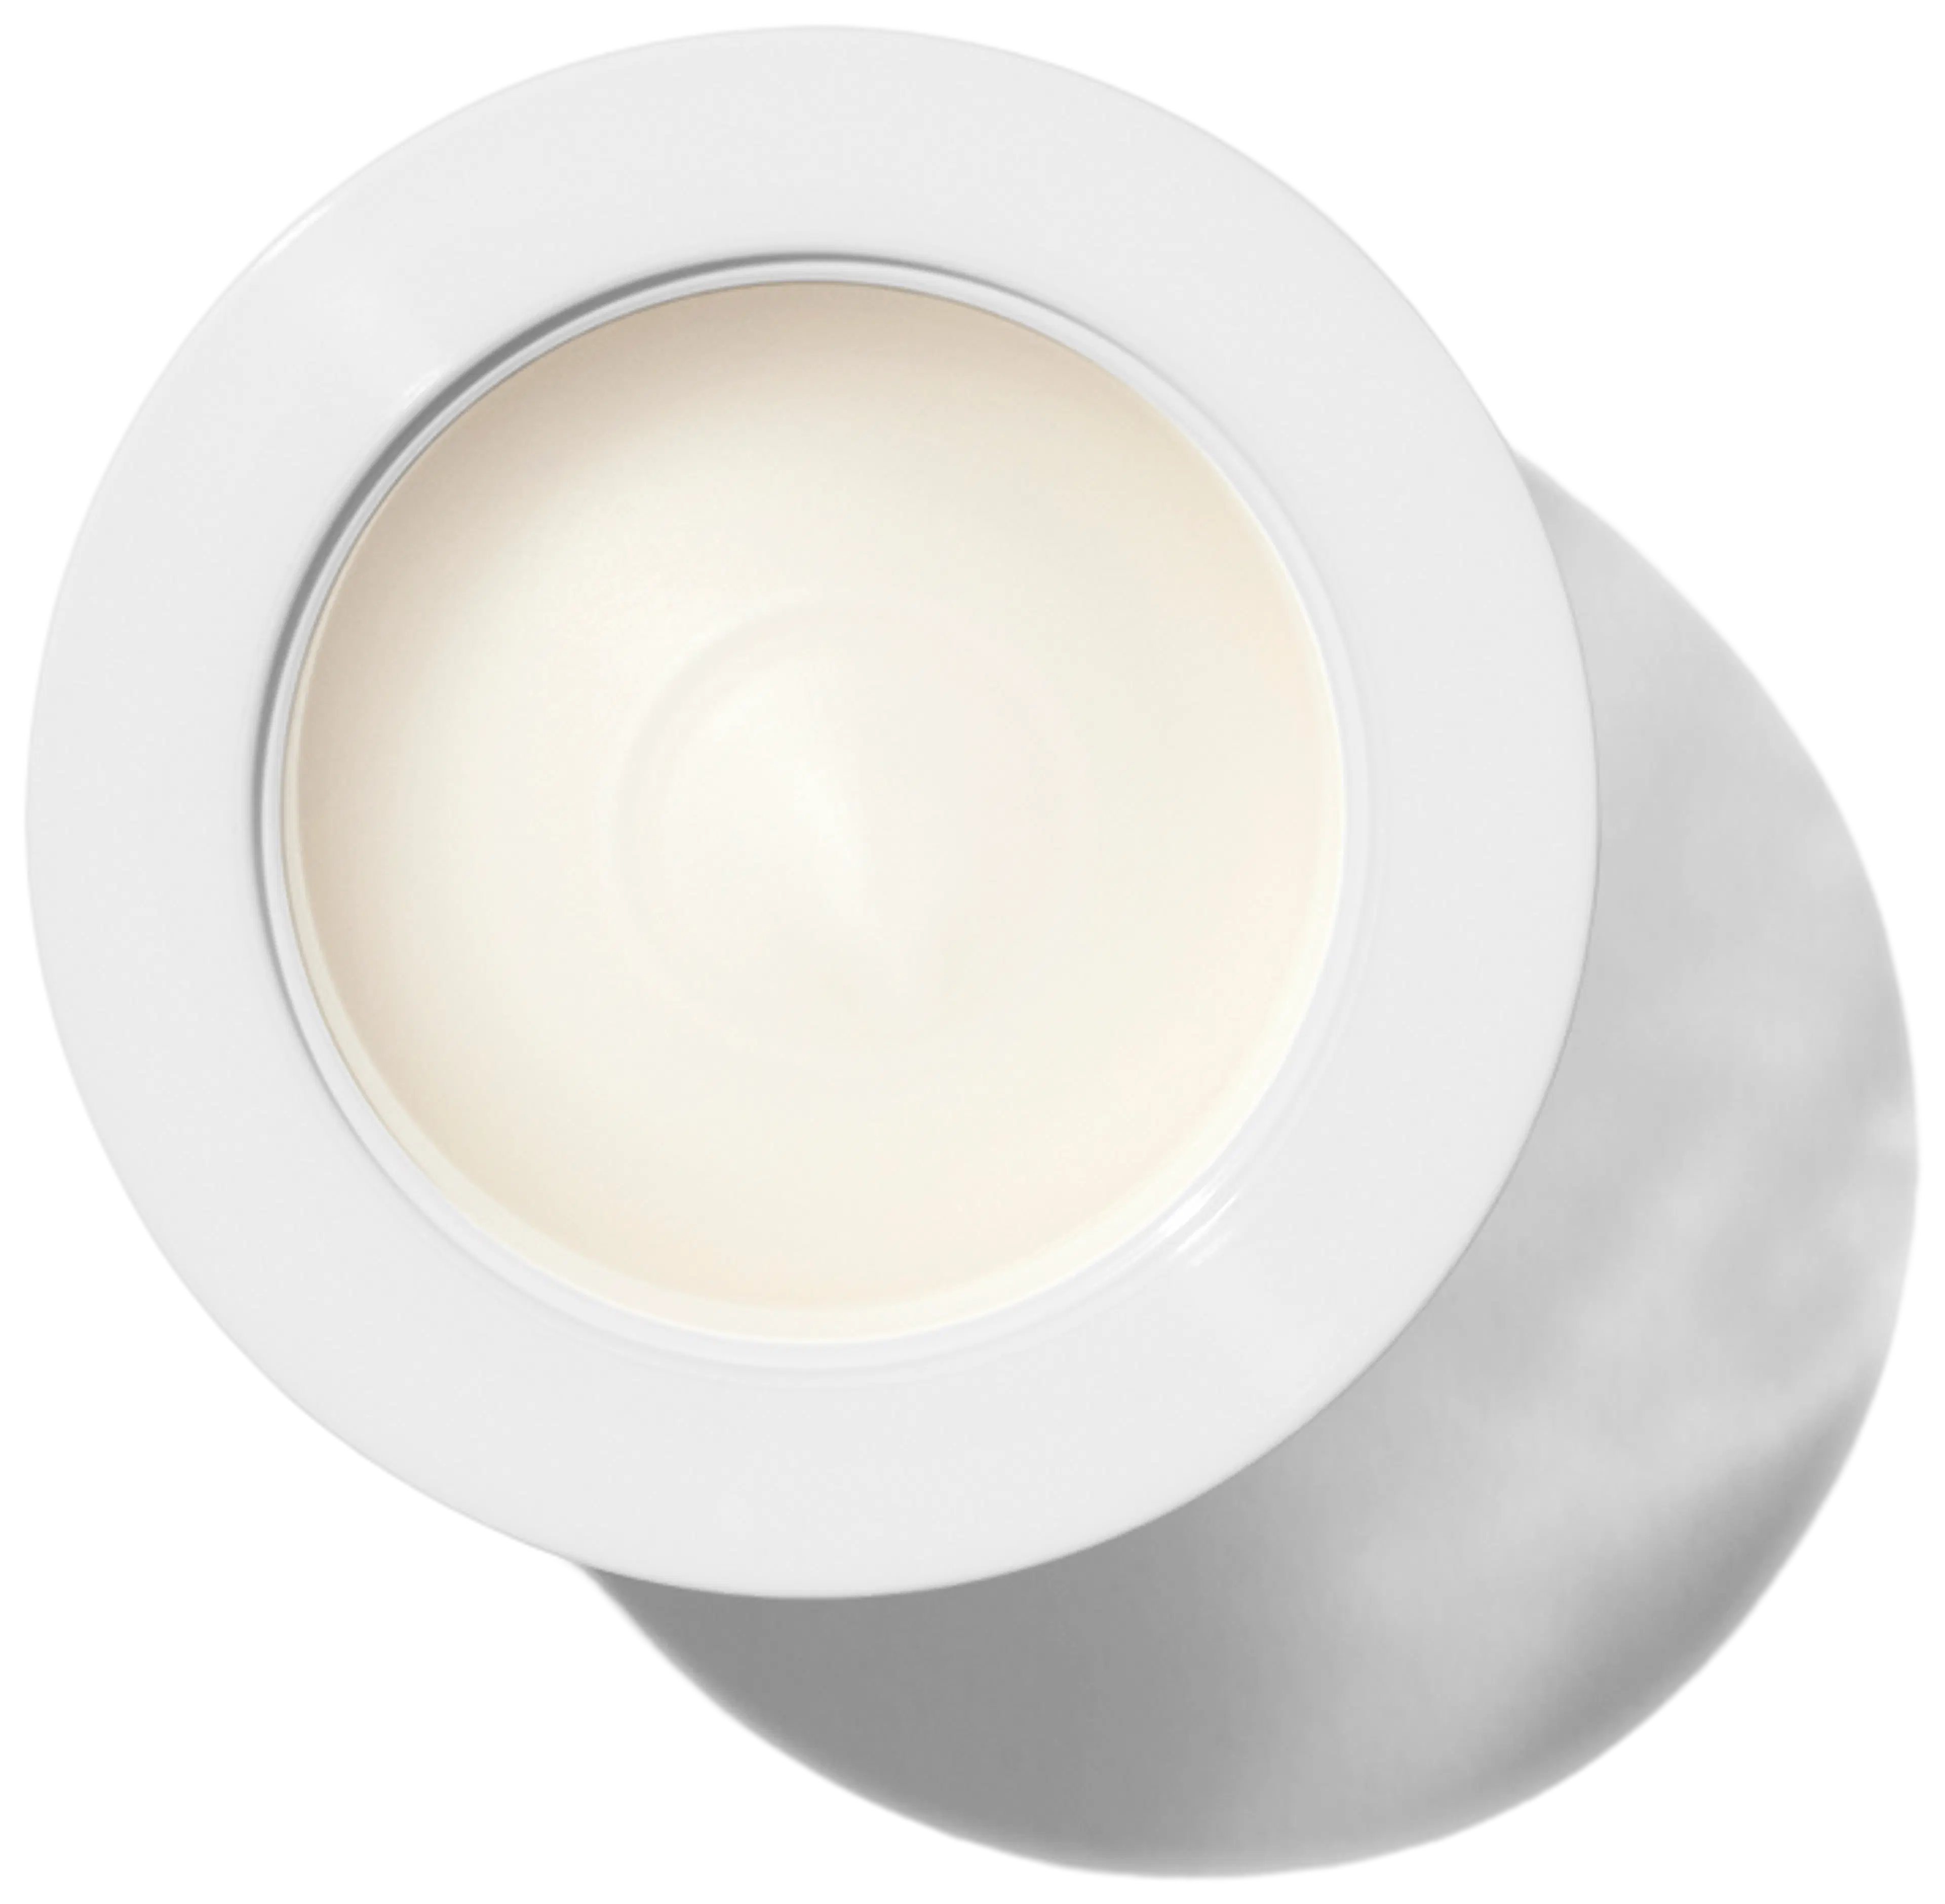 Bobbi Brown Extra Repair Eye Cream Intense Refill silmänympärysvoide täyttöpakkaus